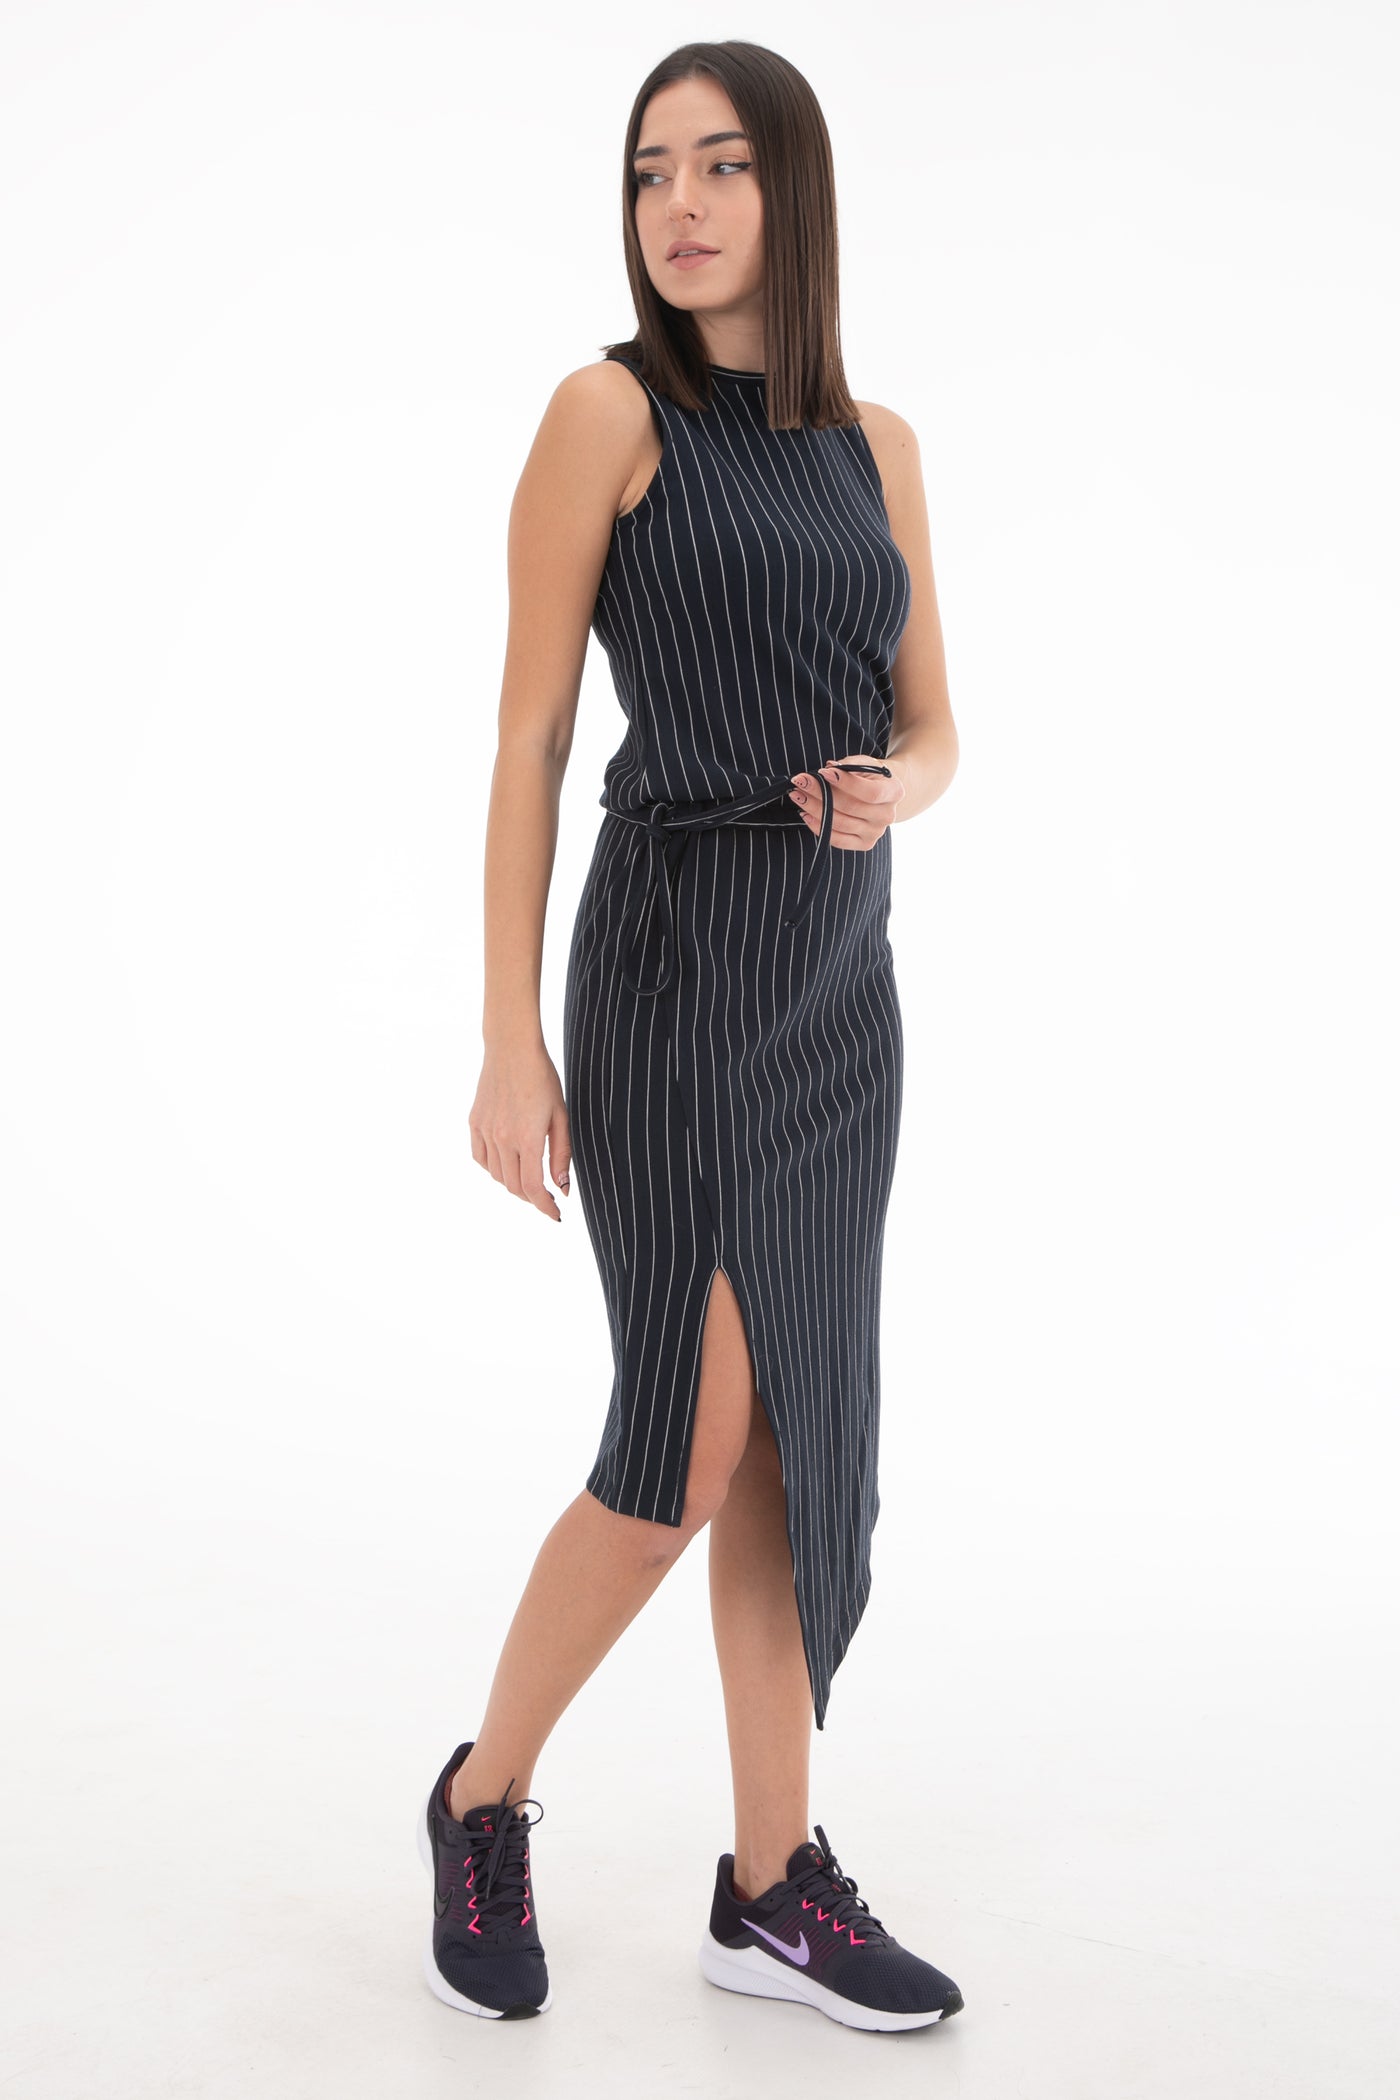 Chassca Bias Cut Sleeveless Striped Dress